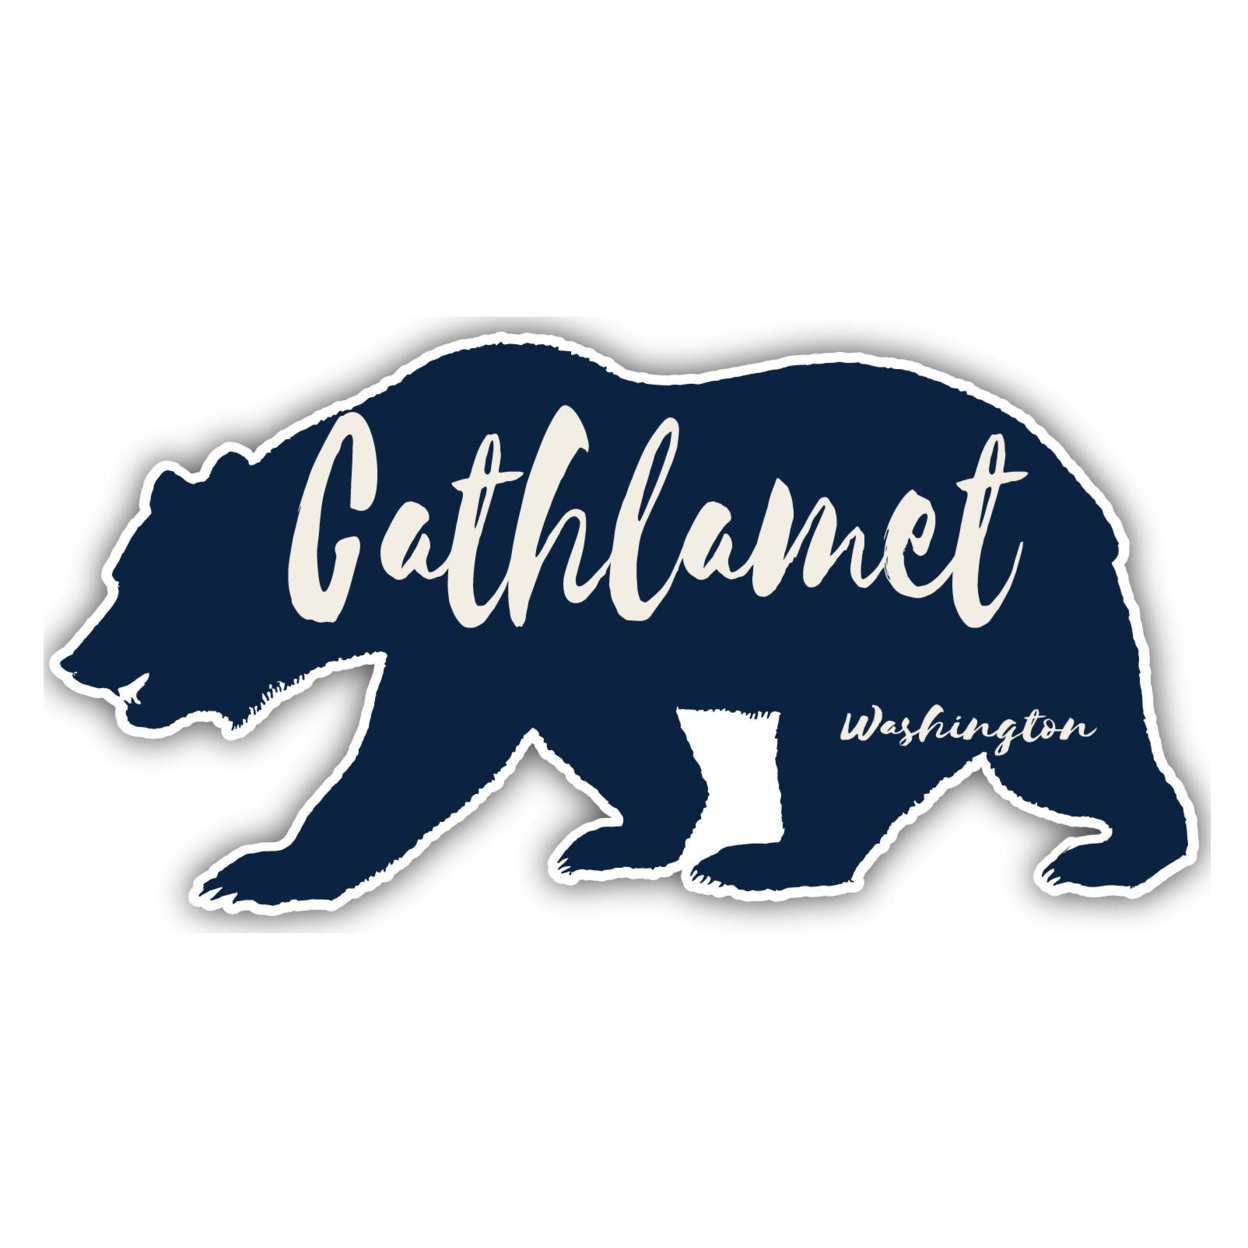 Cathlamet Washington Souvenir Decorative Stickers (Choose Theme And Size) - Single Unit, 8-Inch, Bear